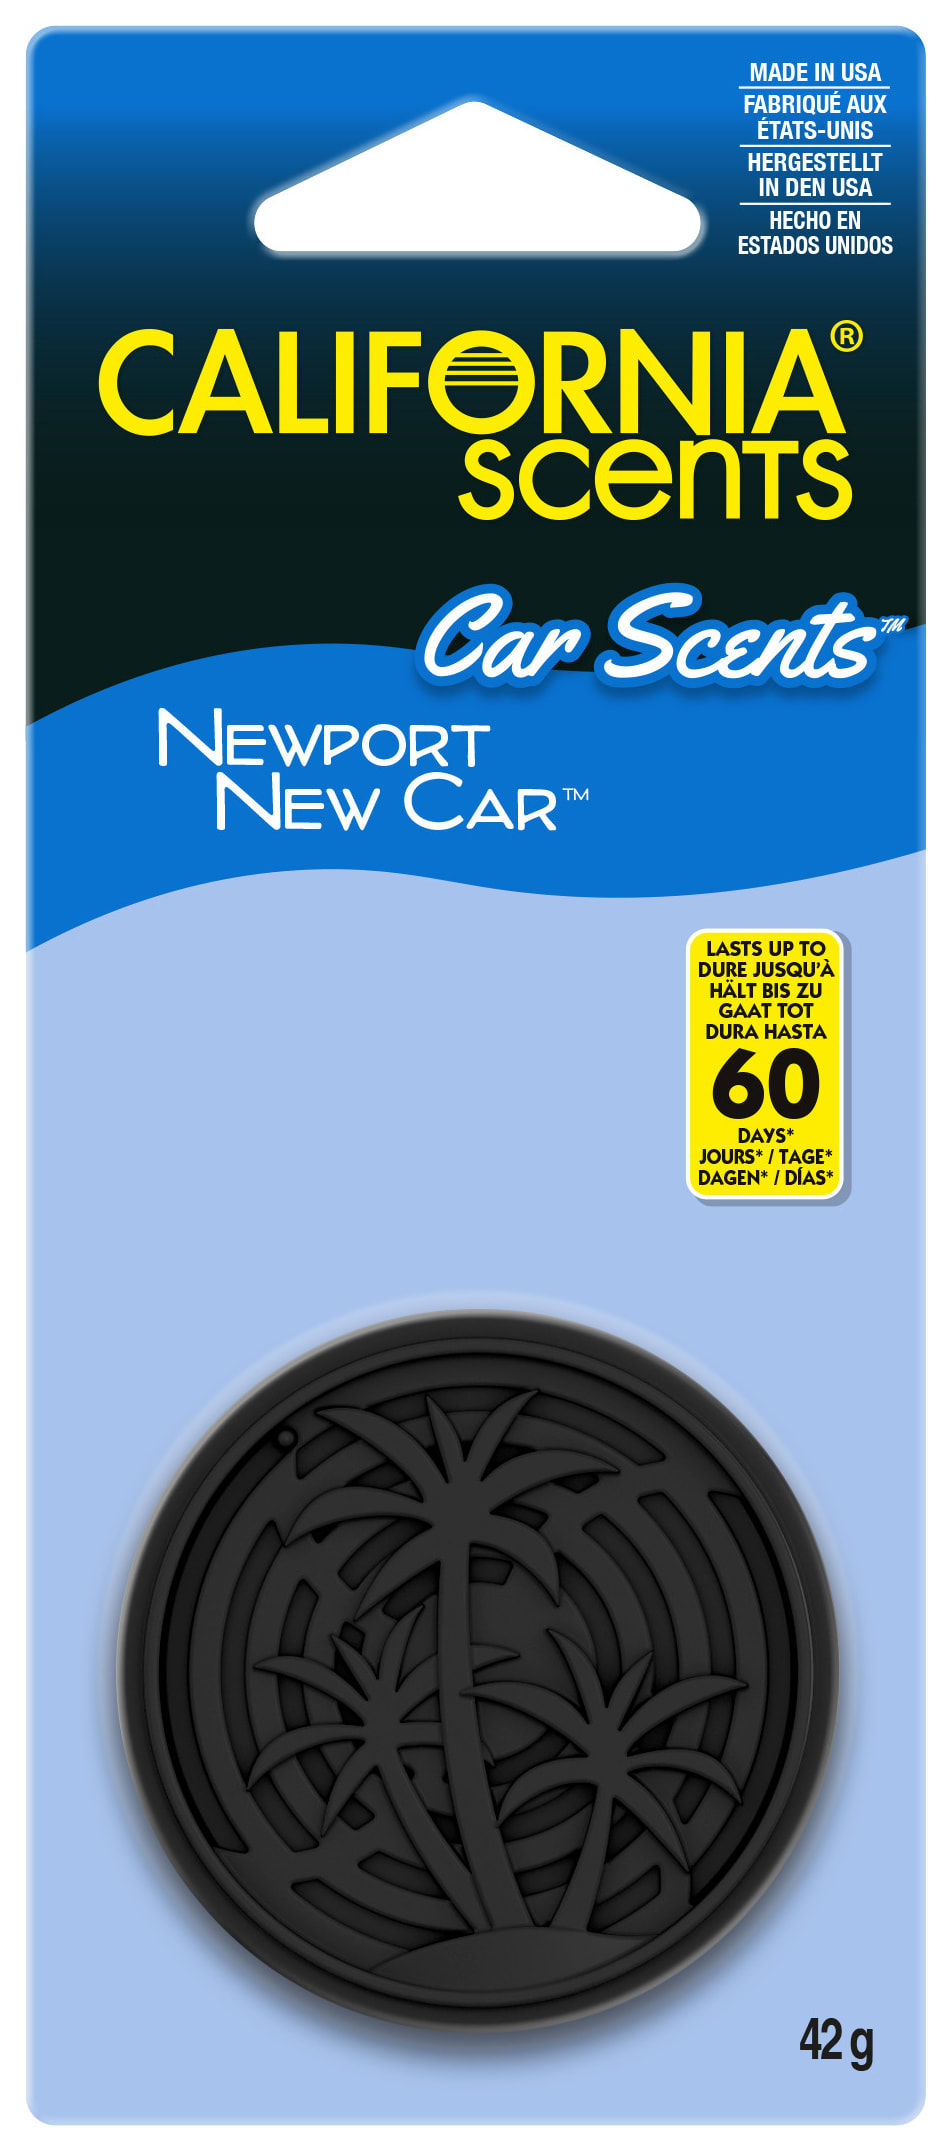 california scents auto lufterfrischer new car newport new car   -  internetdrogerie, onlinedrogerie, shop, billige kosmetika